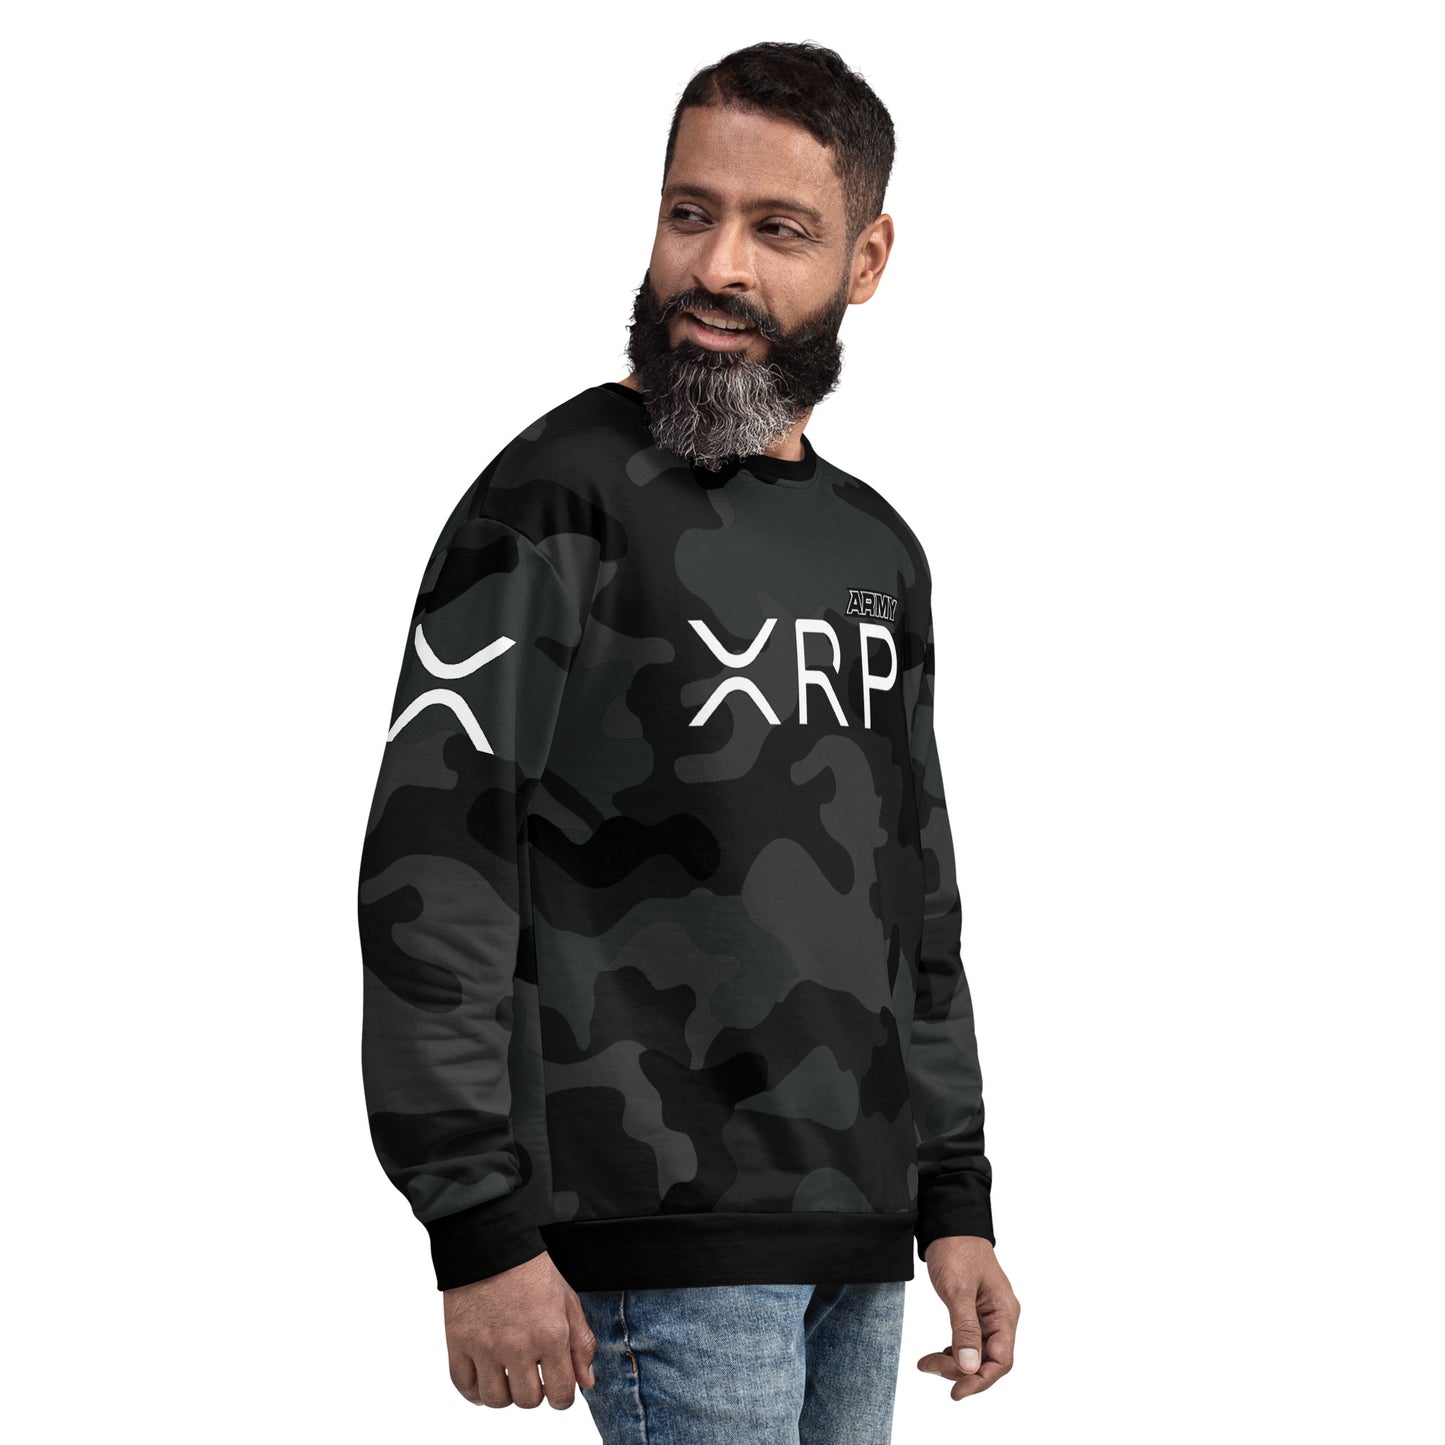 Xrp Army Knights Sweatshirt